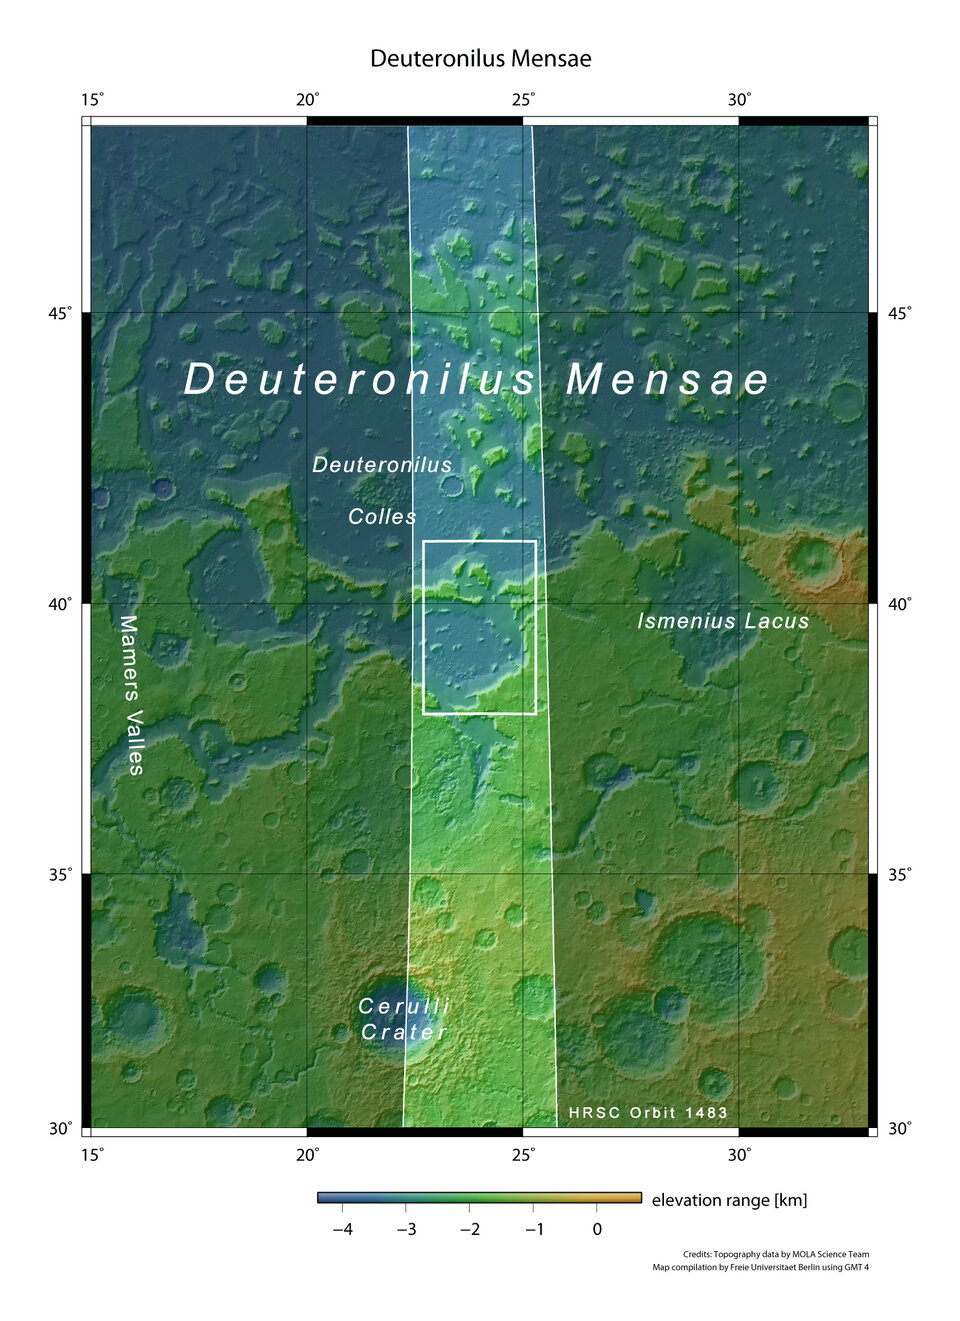 Deuteronilus Mensae seen in context